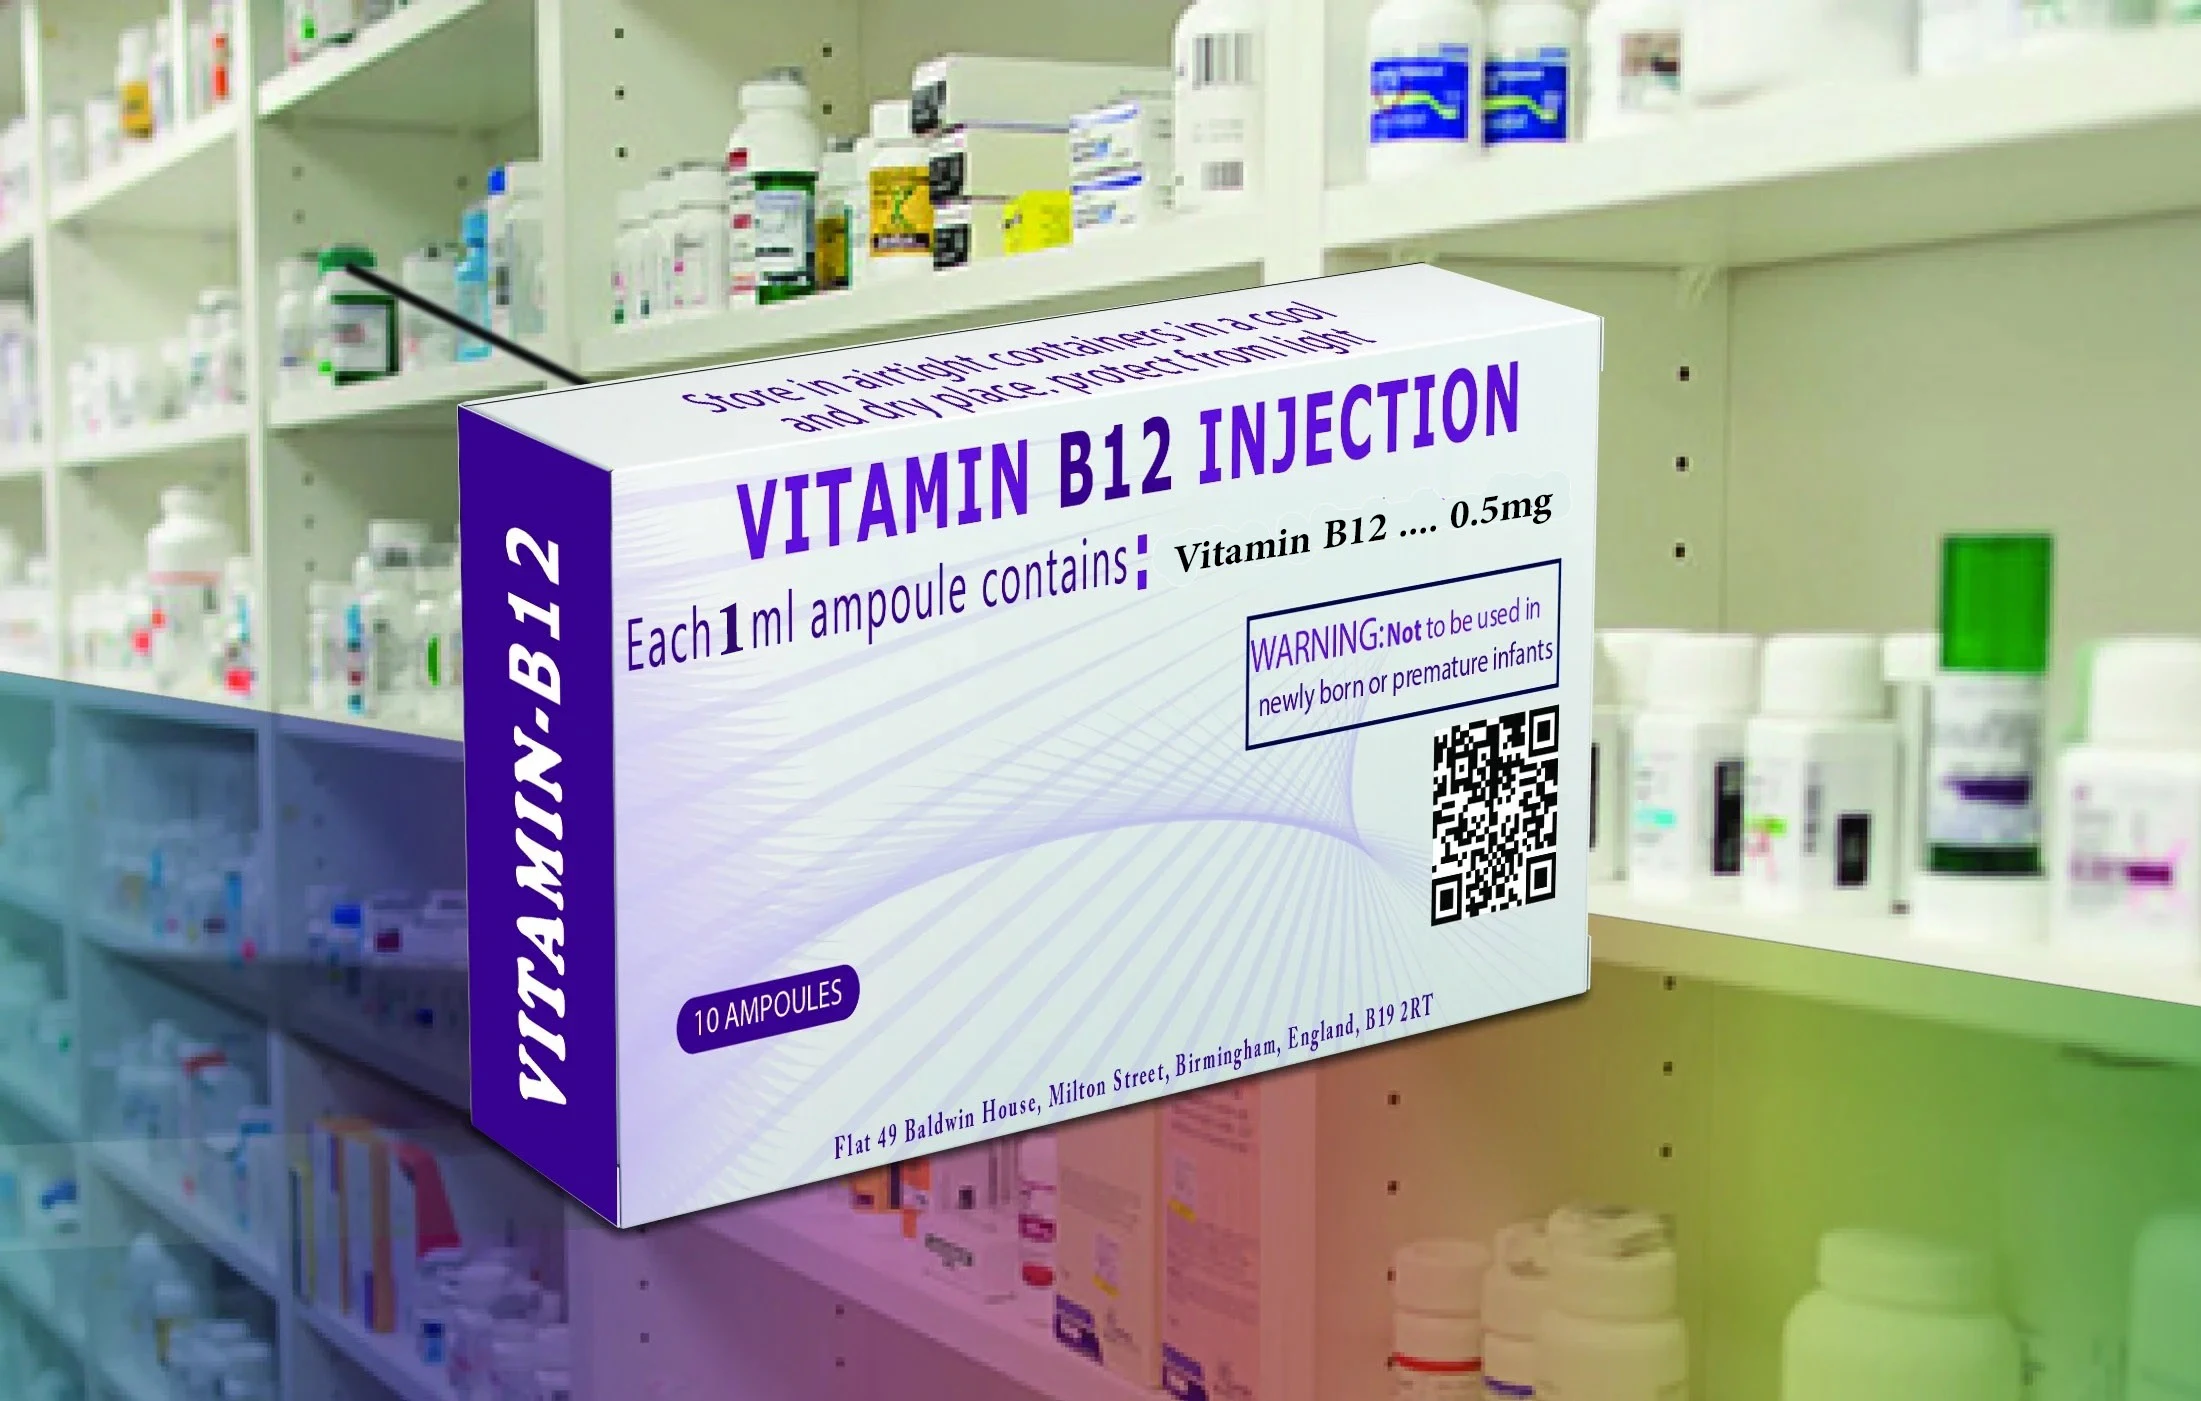 'Vitamin b12 injections', 'Vitamin b12 ampoules', 'Vitamines', 'Vitamin b12 '